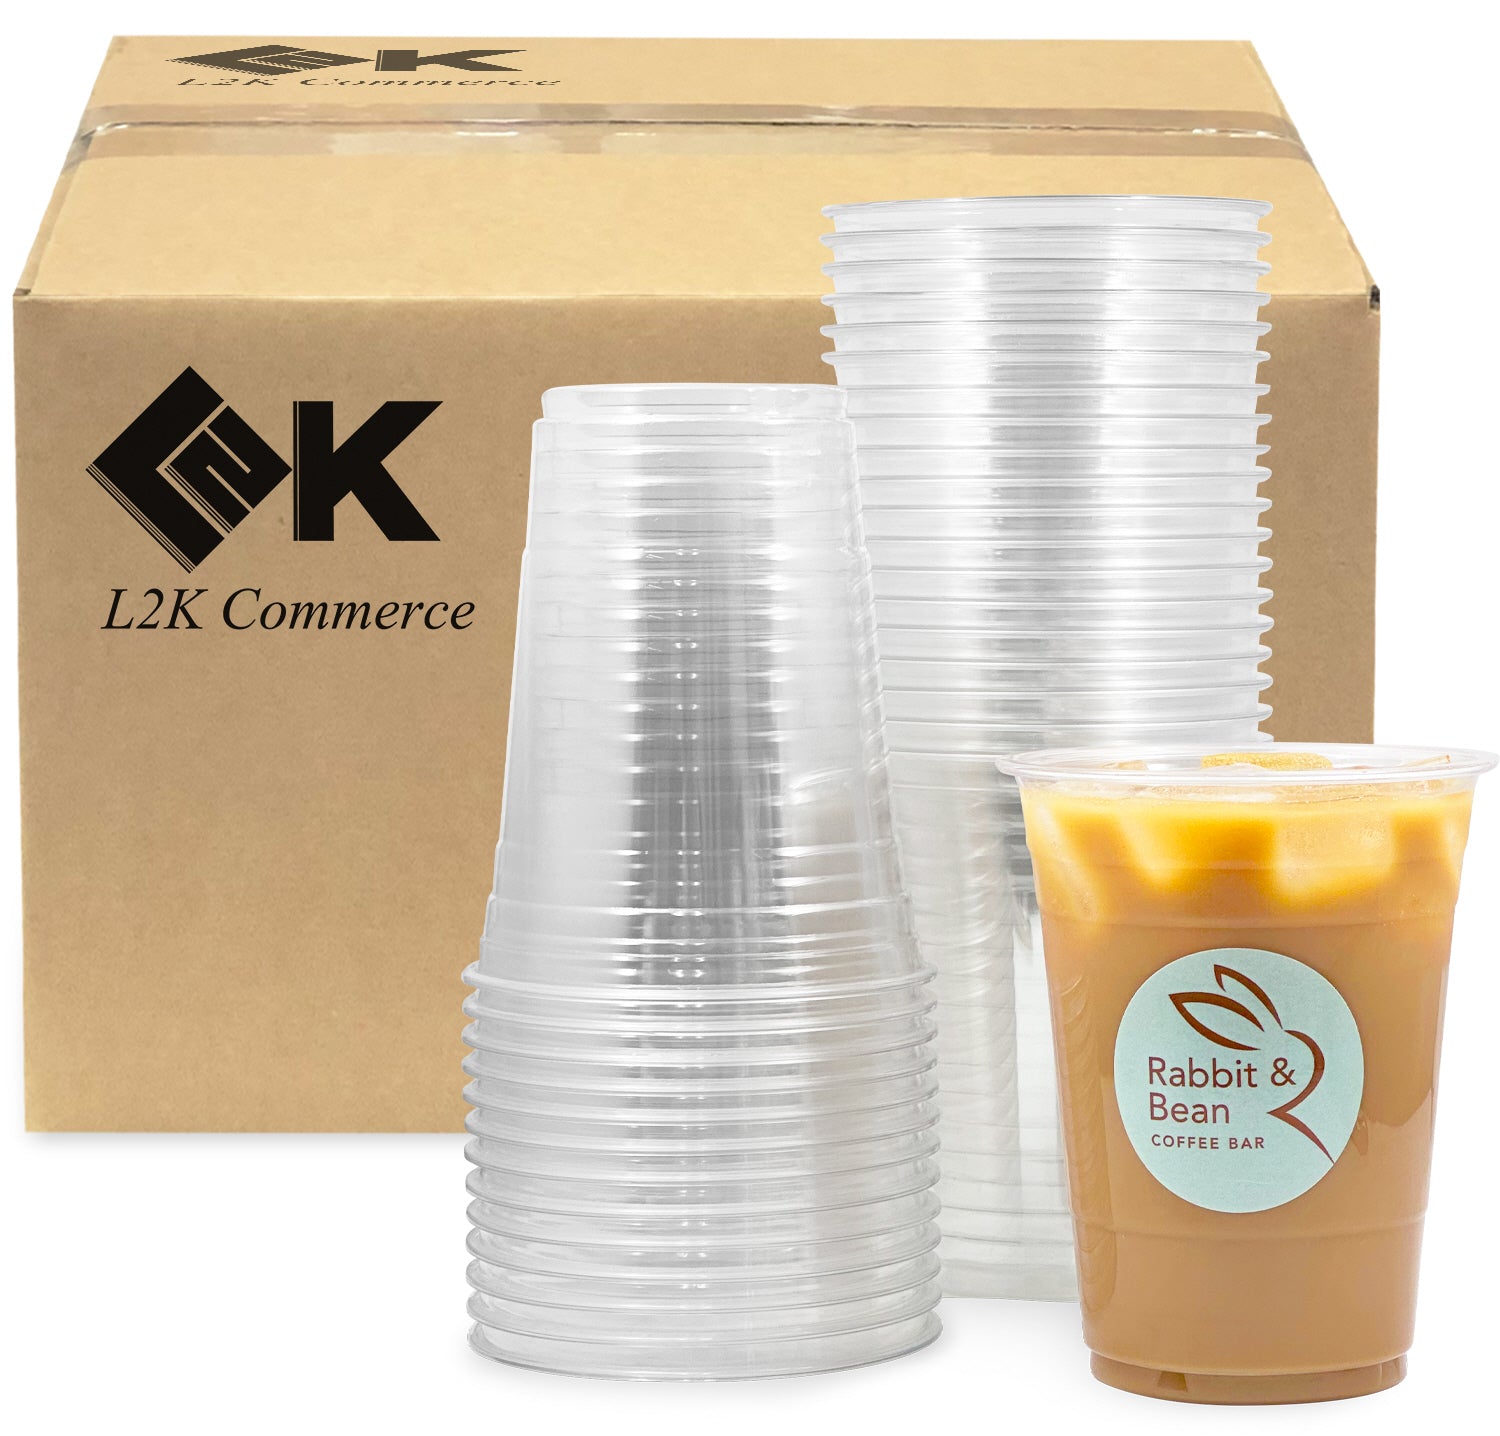 Karat 16 oz. PET Plastic Cups (98mm)